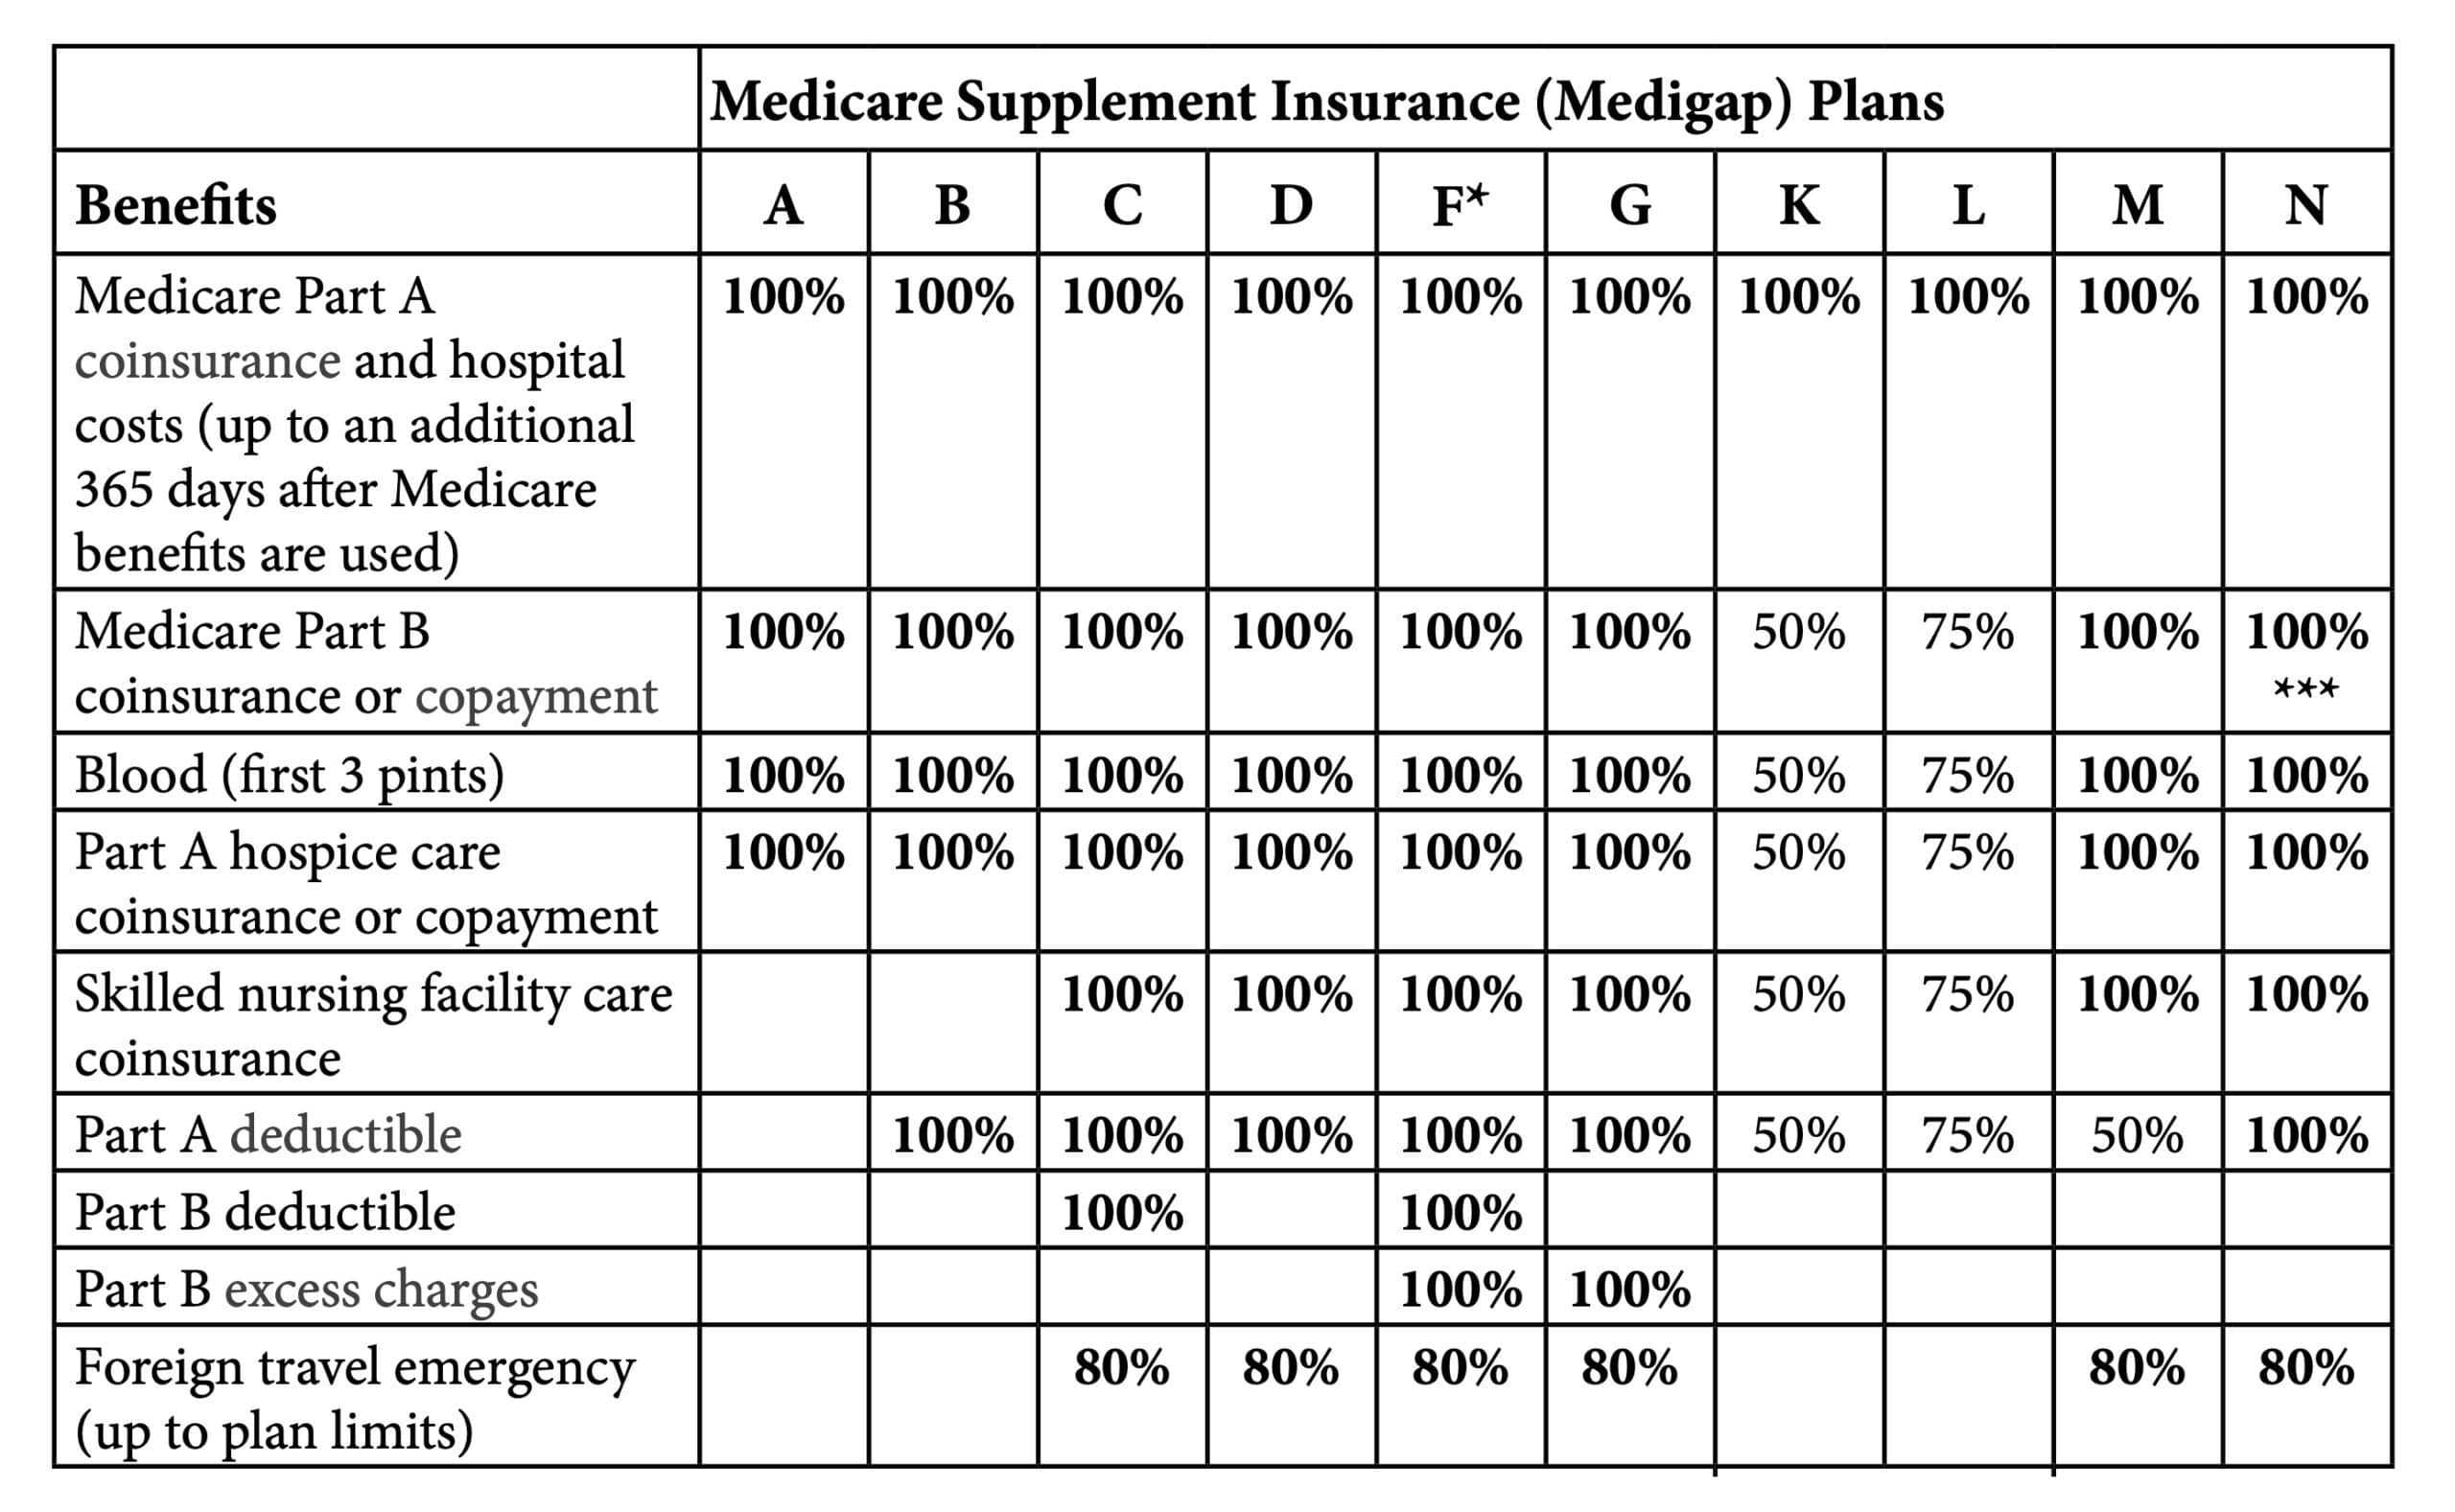 Medigap Insurance Plans in Colorado, medicare advantage plans